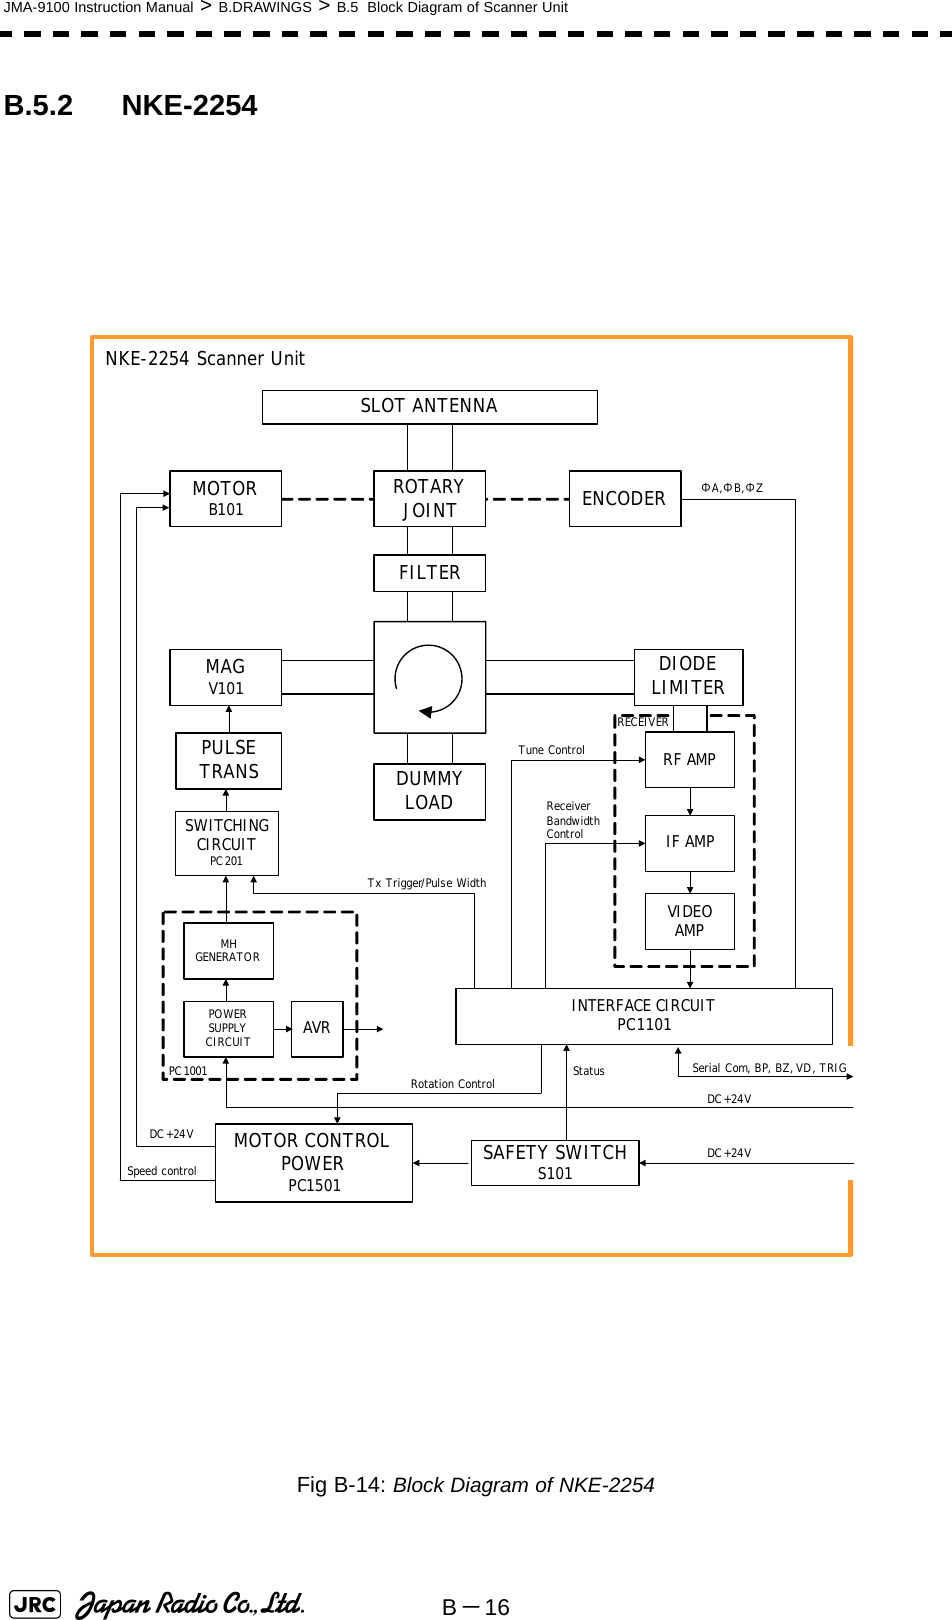 B－16JMA-9100 Instruction Manual &gt; B.DRAWINGS &gt; B.5  Block Diagram of Scanner UnitB.5.2 NKE-2254Fig B-14: Block Diagram of NKE-2254SLOT ANTENNAMOTORB101SAFETY SWITCHS101MAGV101PULSETRANSSWITCHINGCIRCUITPC201MHGENERATORAVRPC1001ΦA,ΦB,ΦZFILTERDUMMYLOADDC+24VSerial Com, BP, BZ, VD, TRIGNKE-2254 Scanner UnitPOWER SUPPLYCIRCUITMOTOR CONTROLPOWERPC1501Rotation ControlSpeed controlStatusDC+24VTx Trigger/Pulse WidthDC+24VENCODERROTARYJOINTINTERFACE CIRCUITPC1101RF AMPIF AMPVIDEO AMPRECEIVERReceiver BandwidthControlTune ControlDIODELIMITER